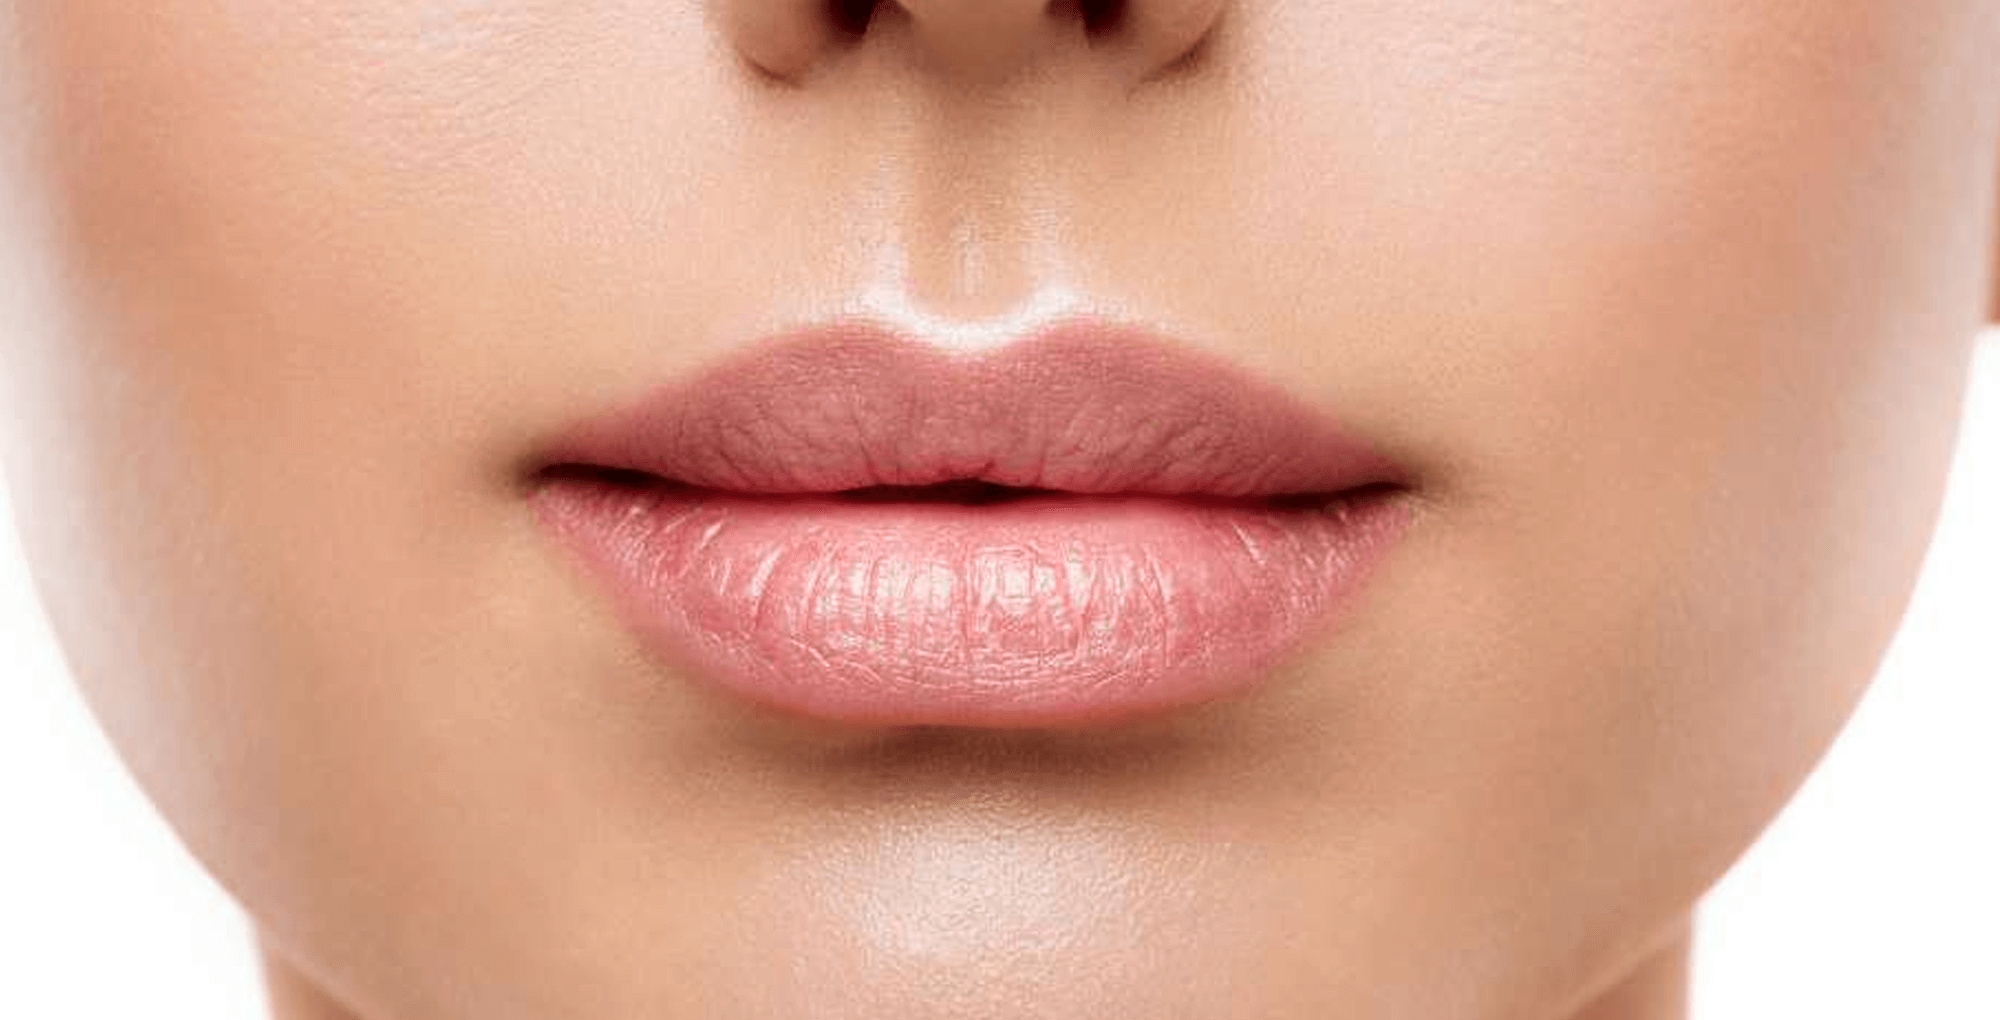 davinci lips volumizare buze forma simetrie acid hialuronic dermatologie MedLink Craiova